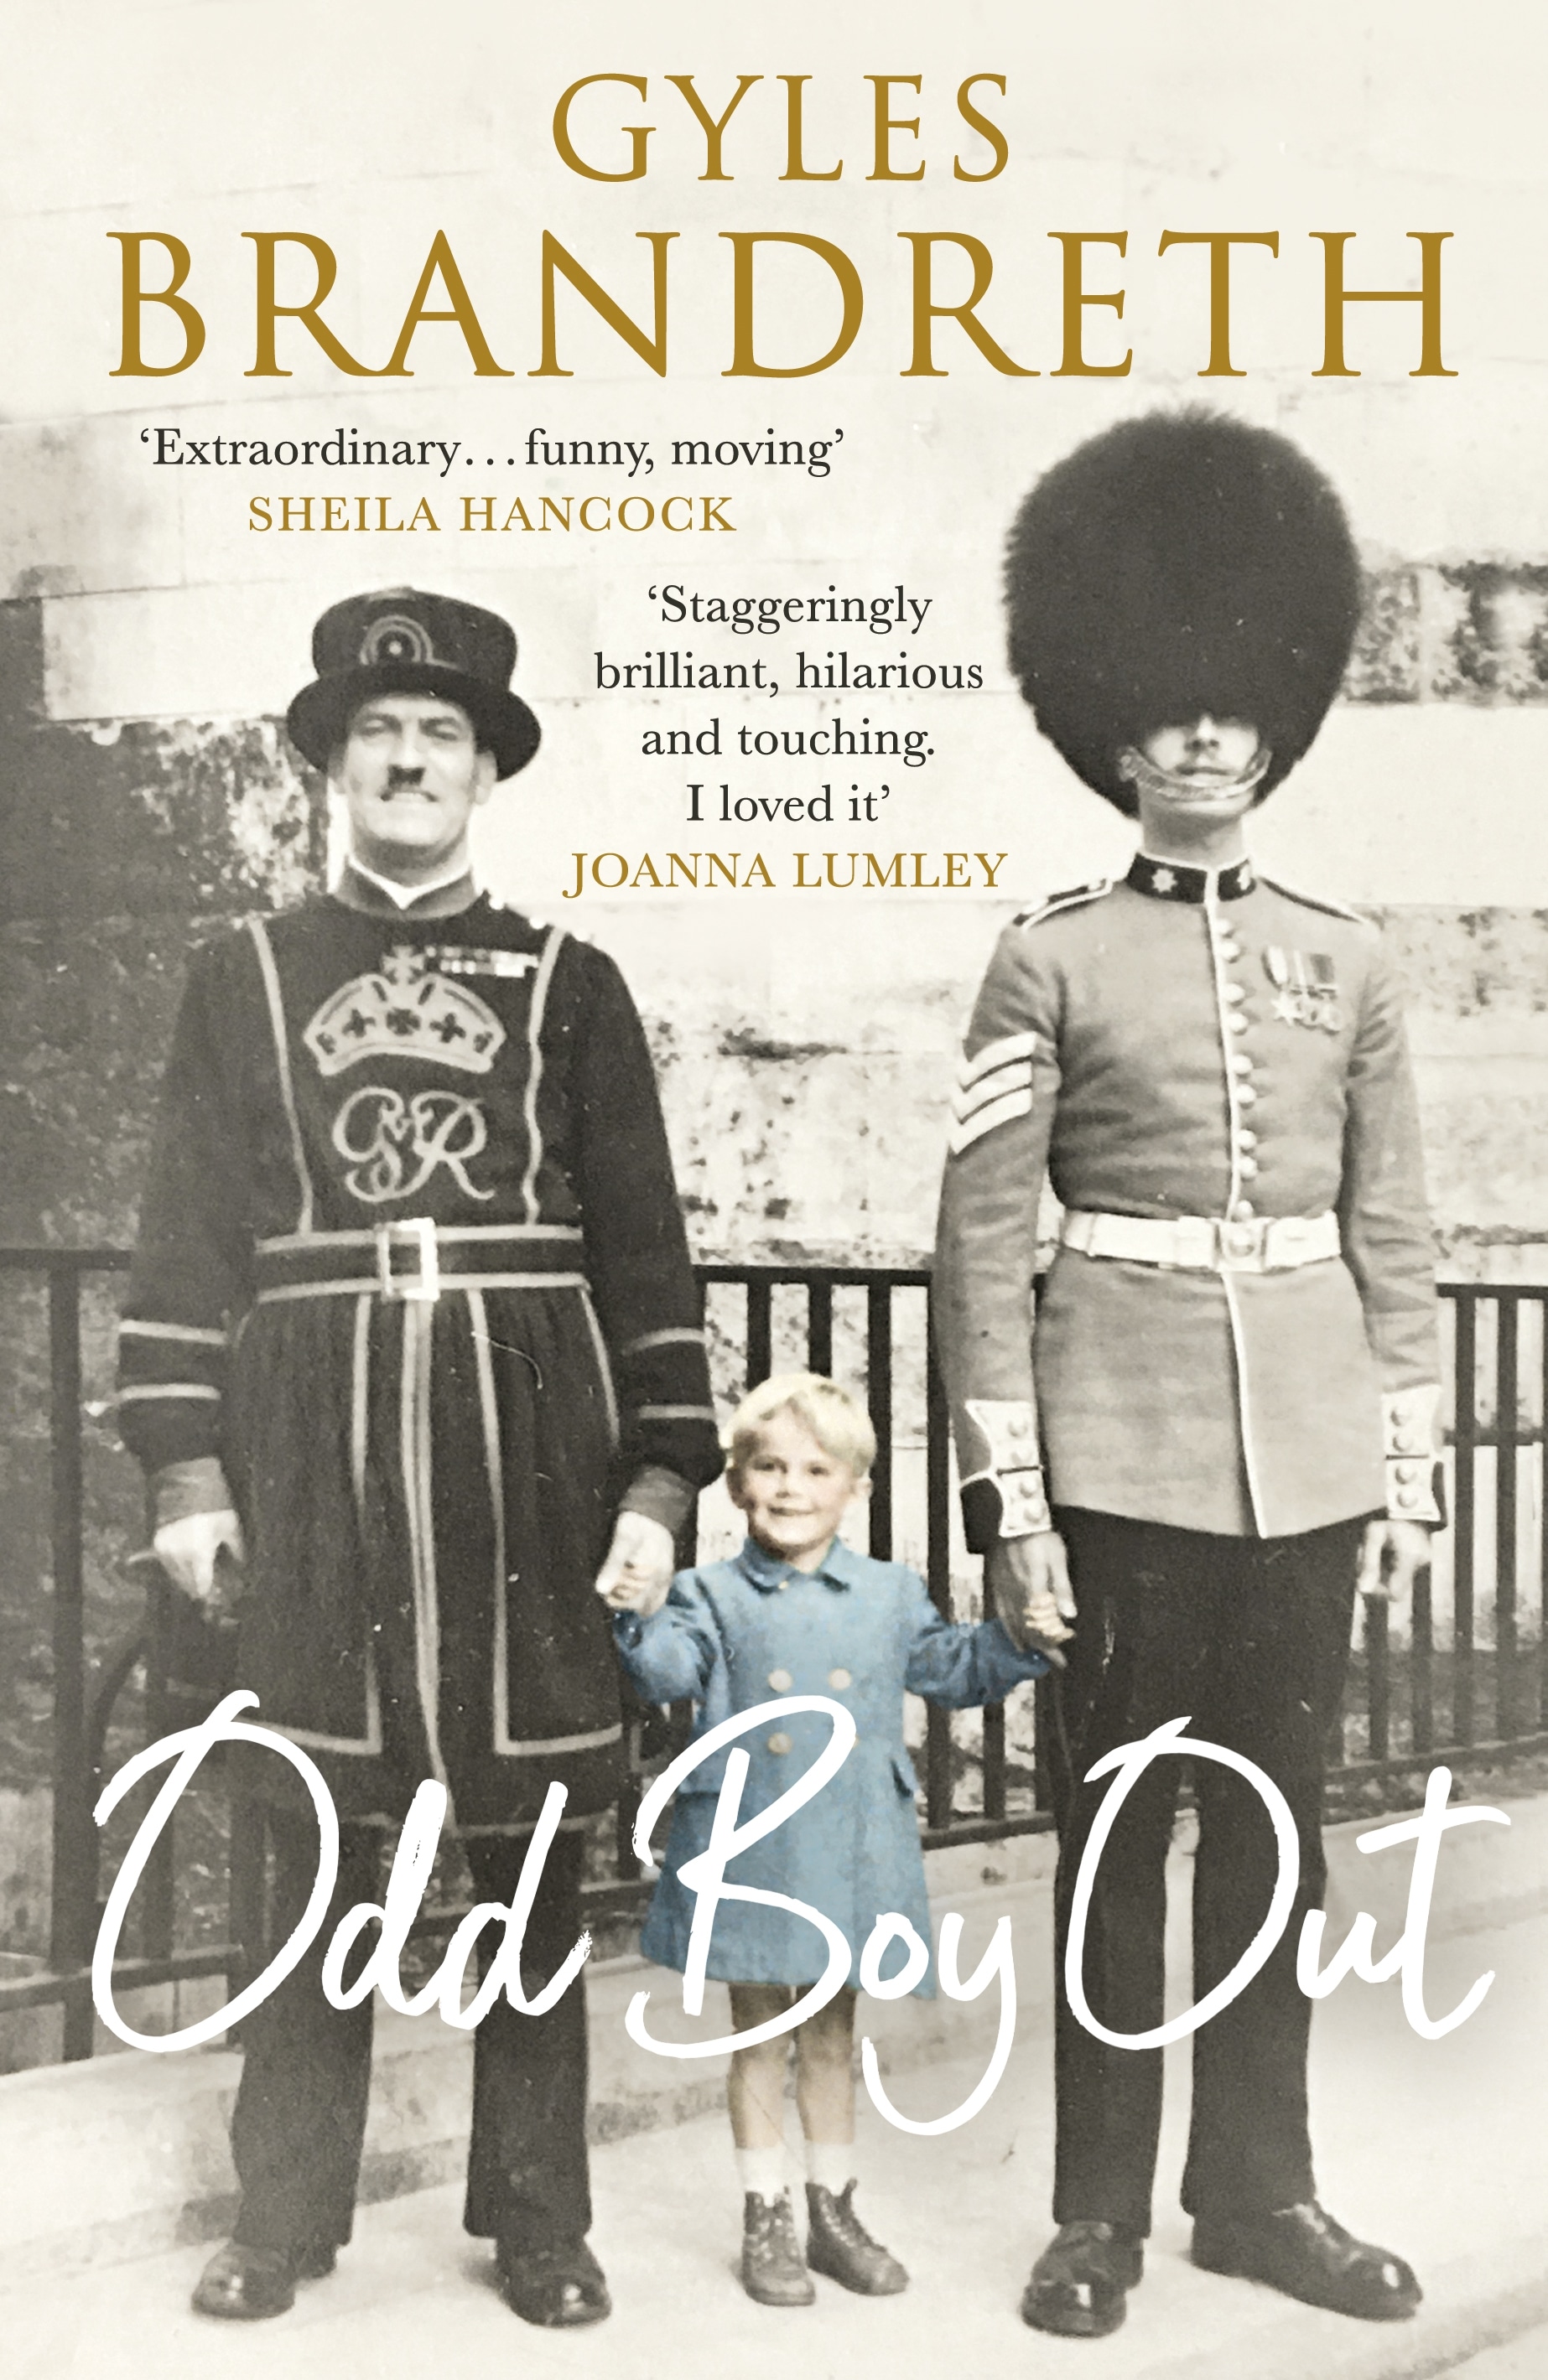 Book “Odd Boy Out” by Gyles Brandreth — September 16, 2021